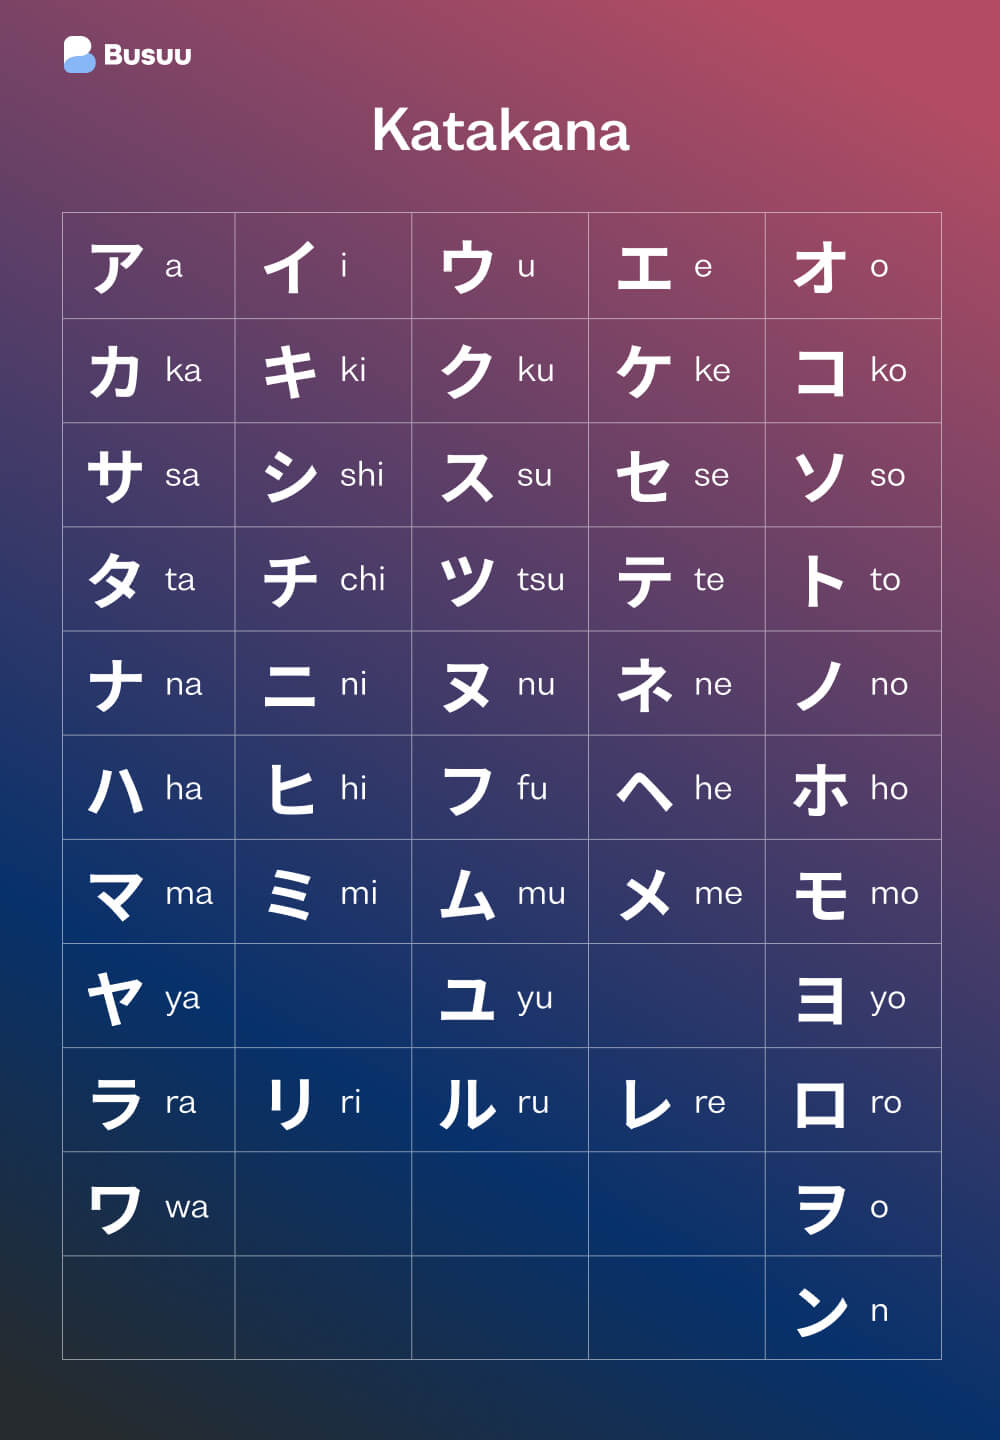 Katakana chart, courtesy of language-learning app Busuu's Japanese alphabet guide